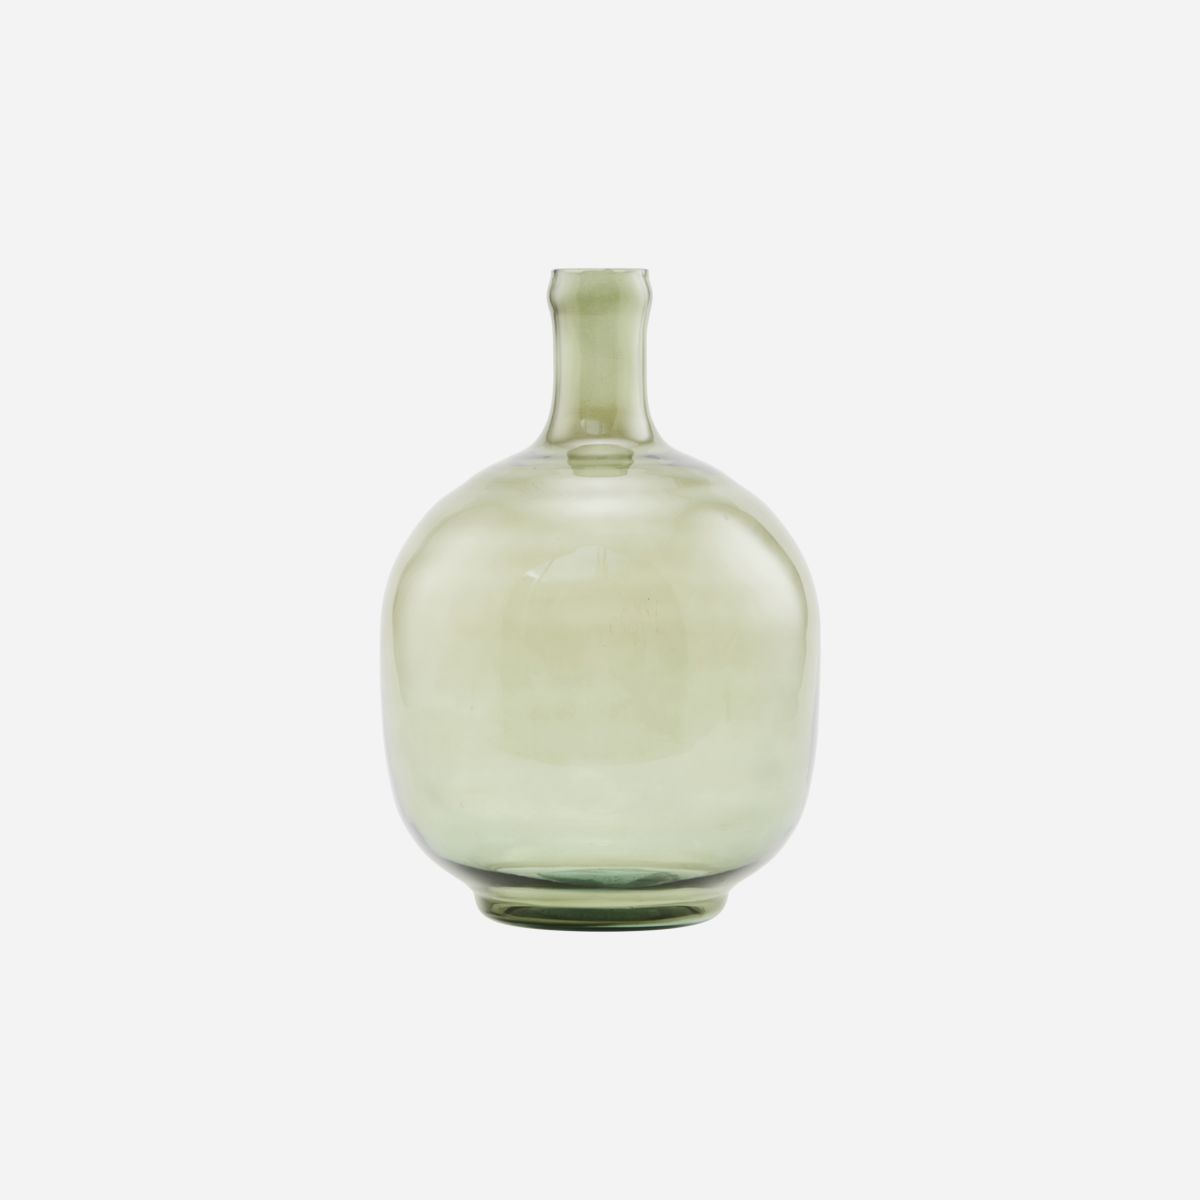  Tinka vase, H 31,5 cm, mørkegrøn